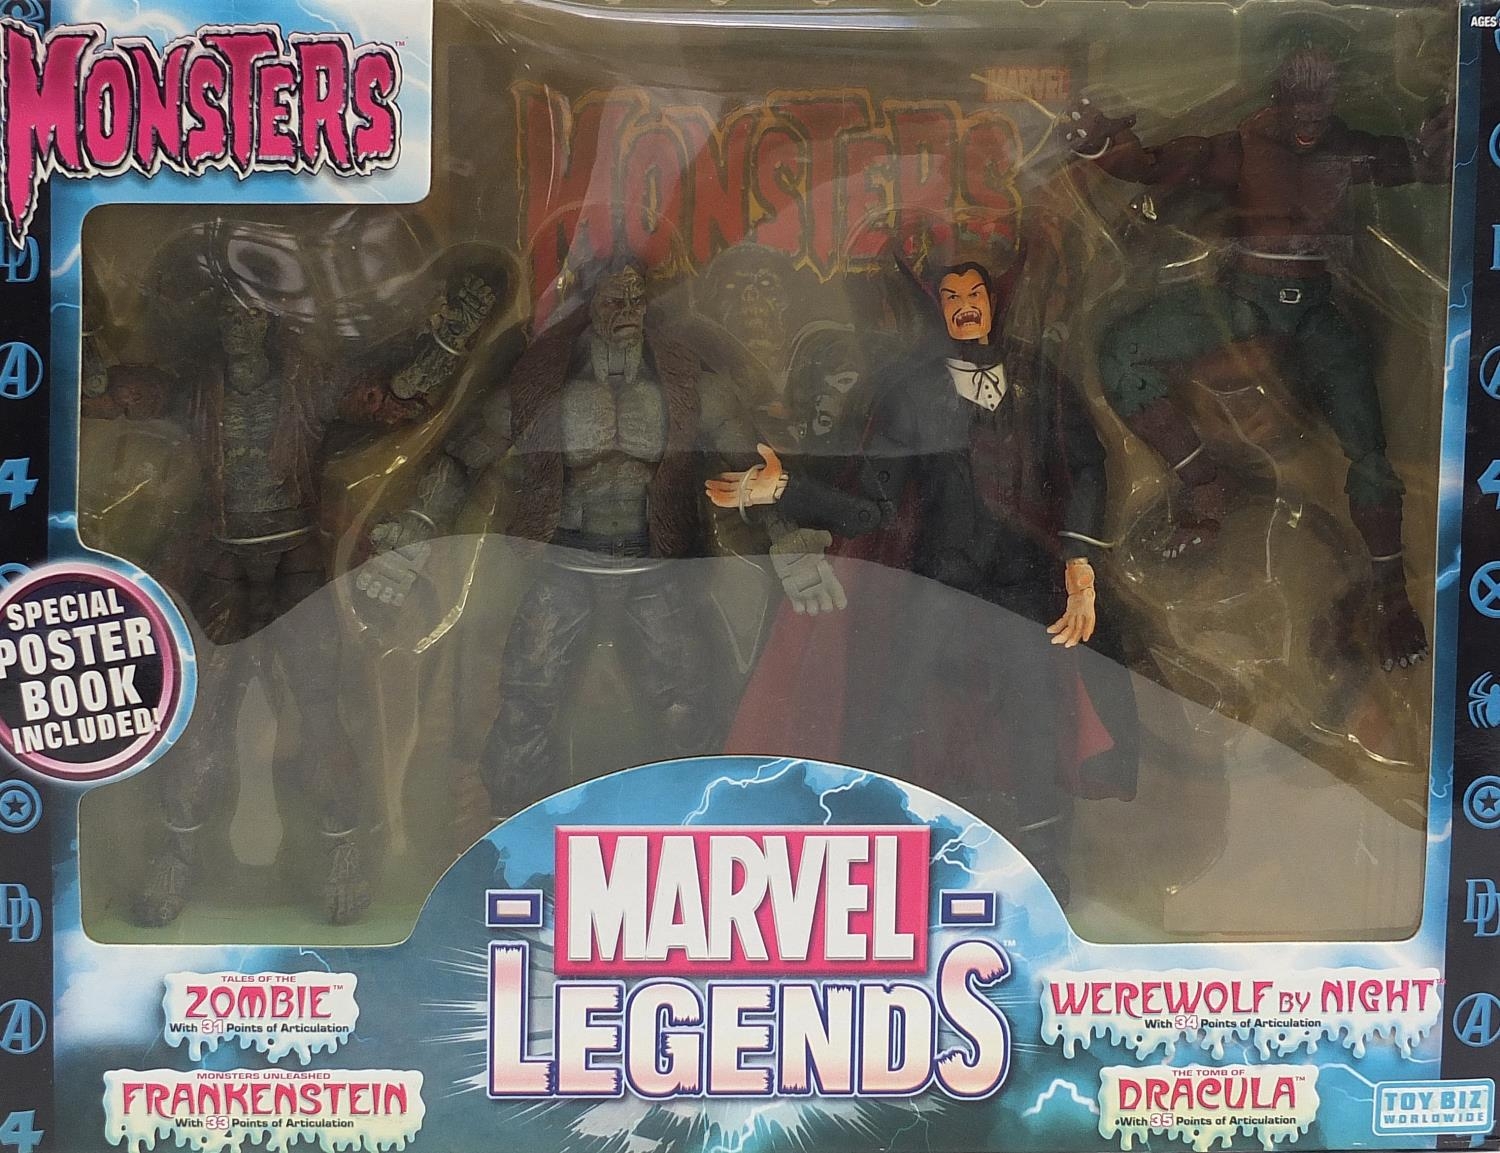 Marvel Legends Monsters action figure set by Toy Biz with box - Bild 2 aus 3